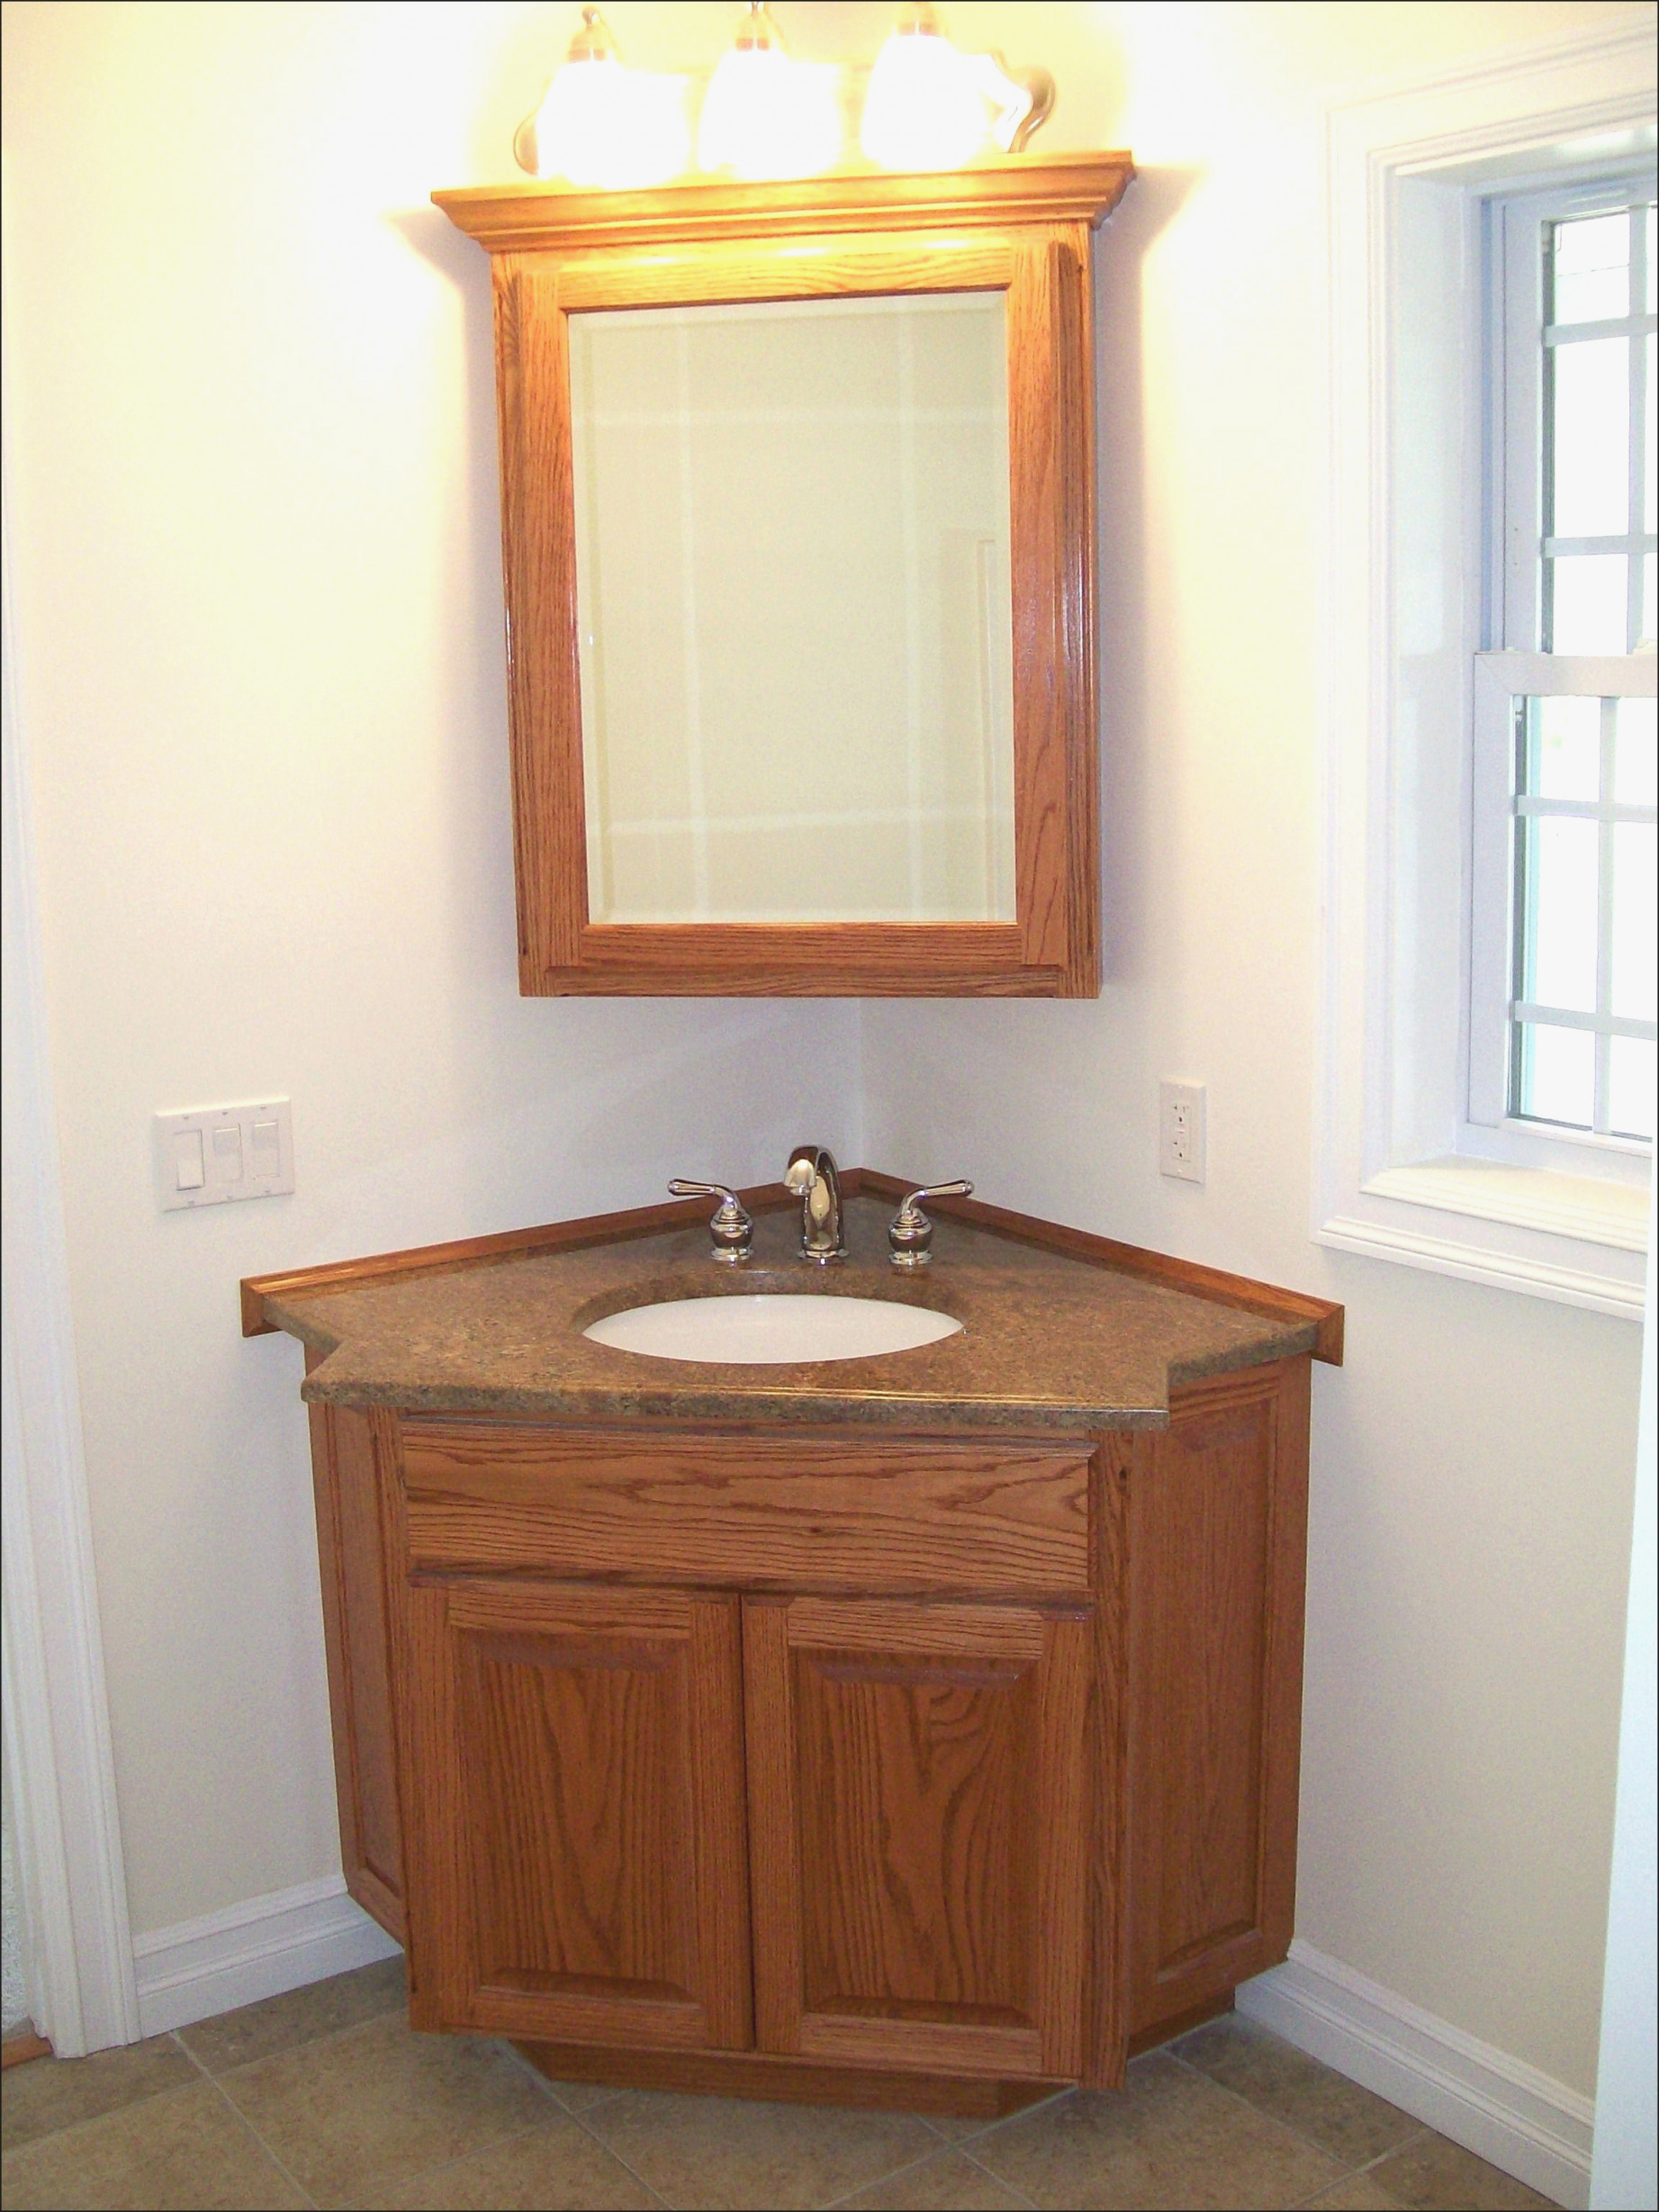 bathroom cabinets diy best of beautiful corner bathroom sink and cabinet of bathroom cabinets diy